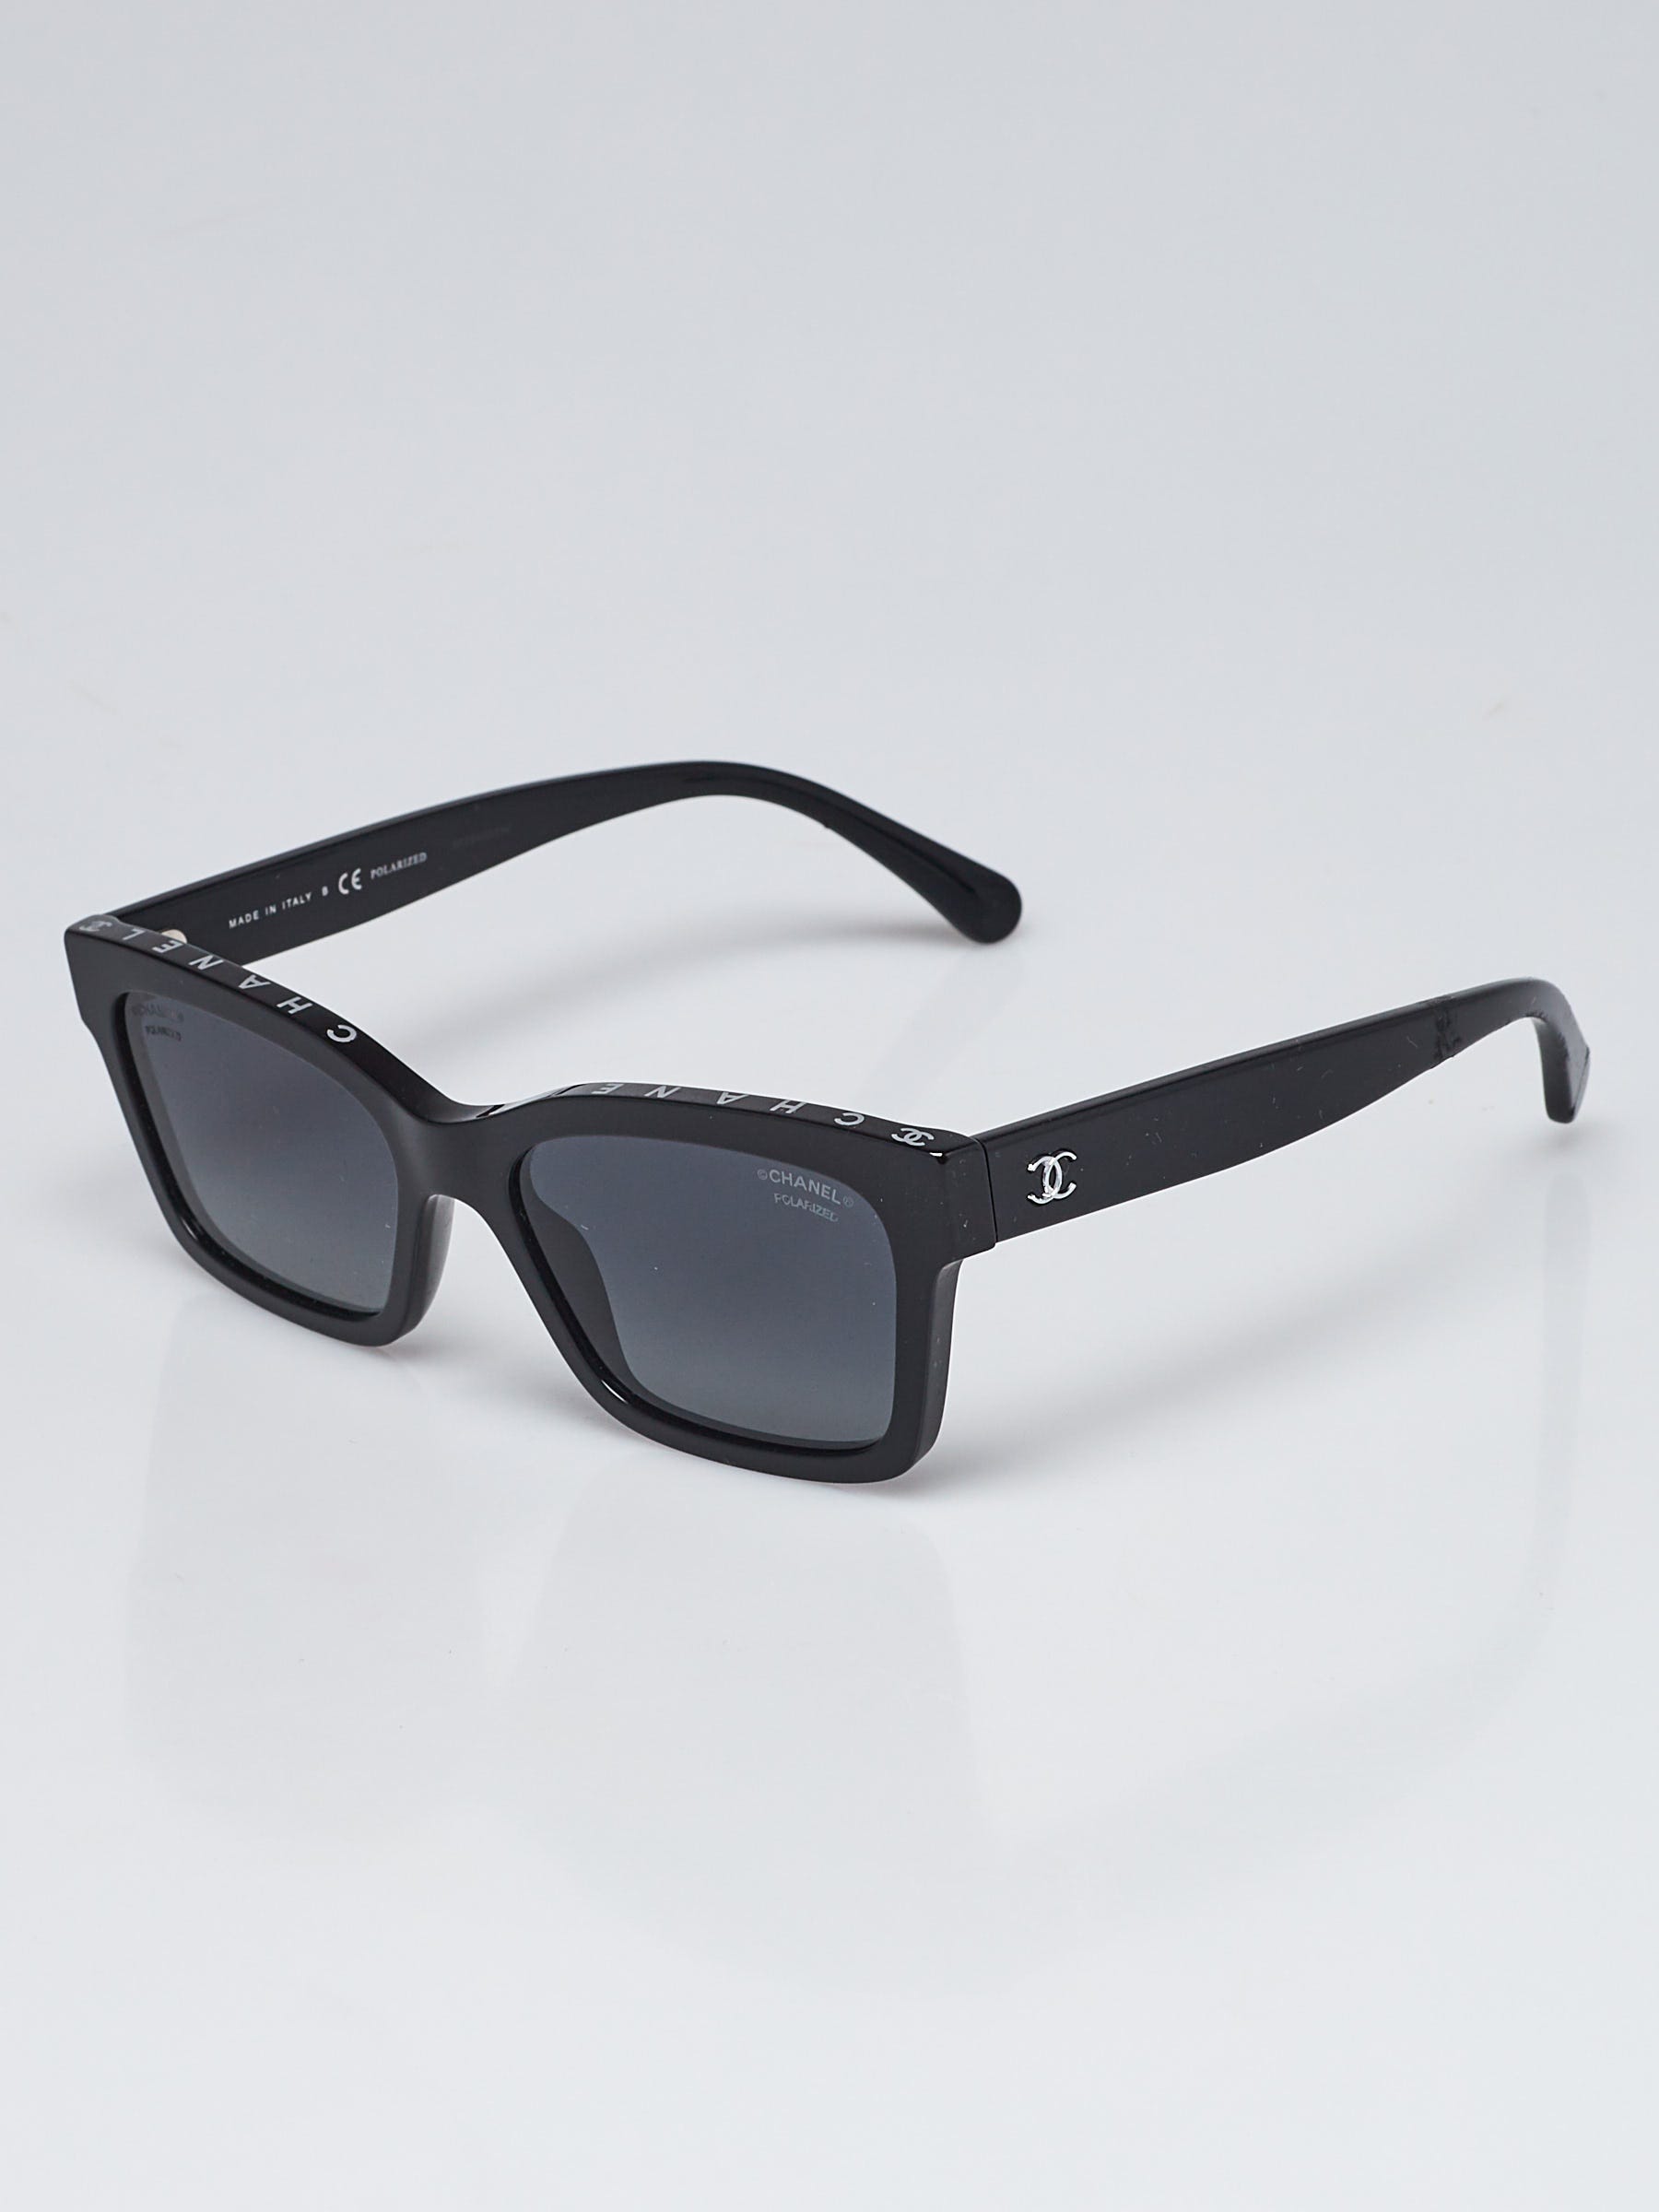 Chanel Black Acetate Square Frame Logo Polarized Sunglasses- 5417